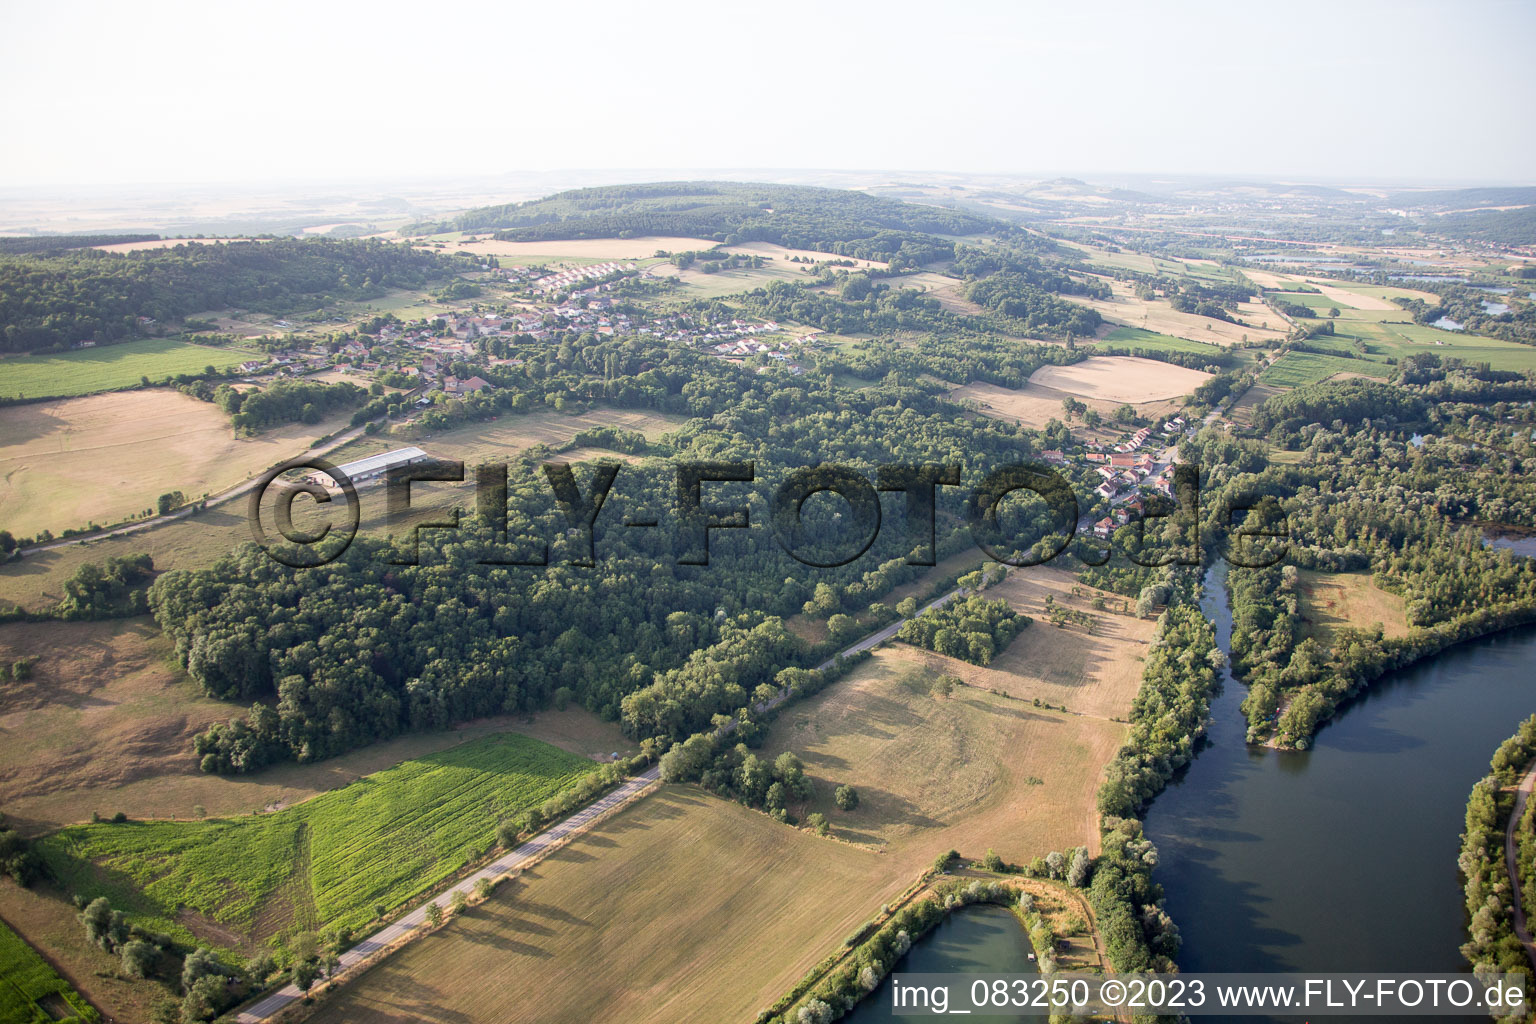 Bird's eye view of Arnaville in the state Meurthe et Moselle, France